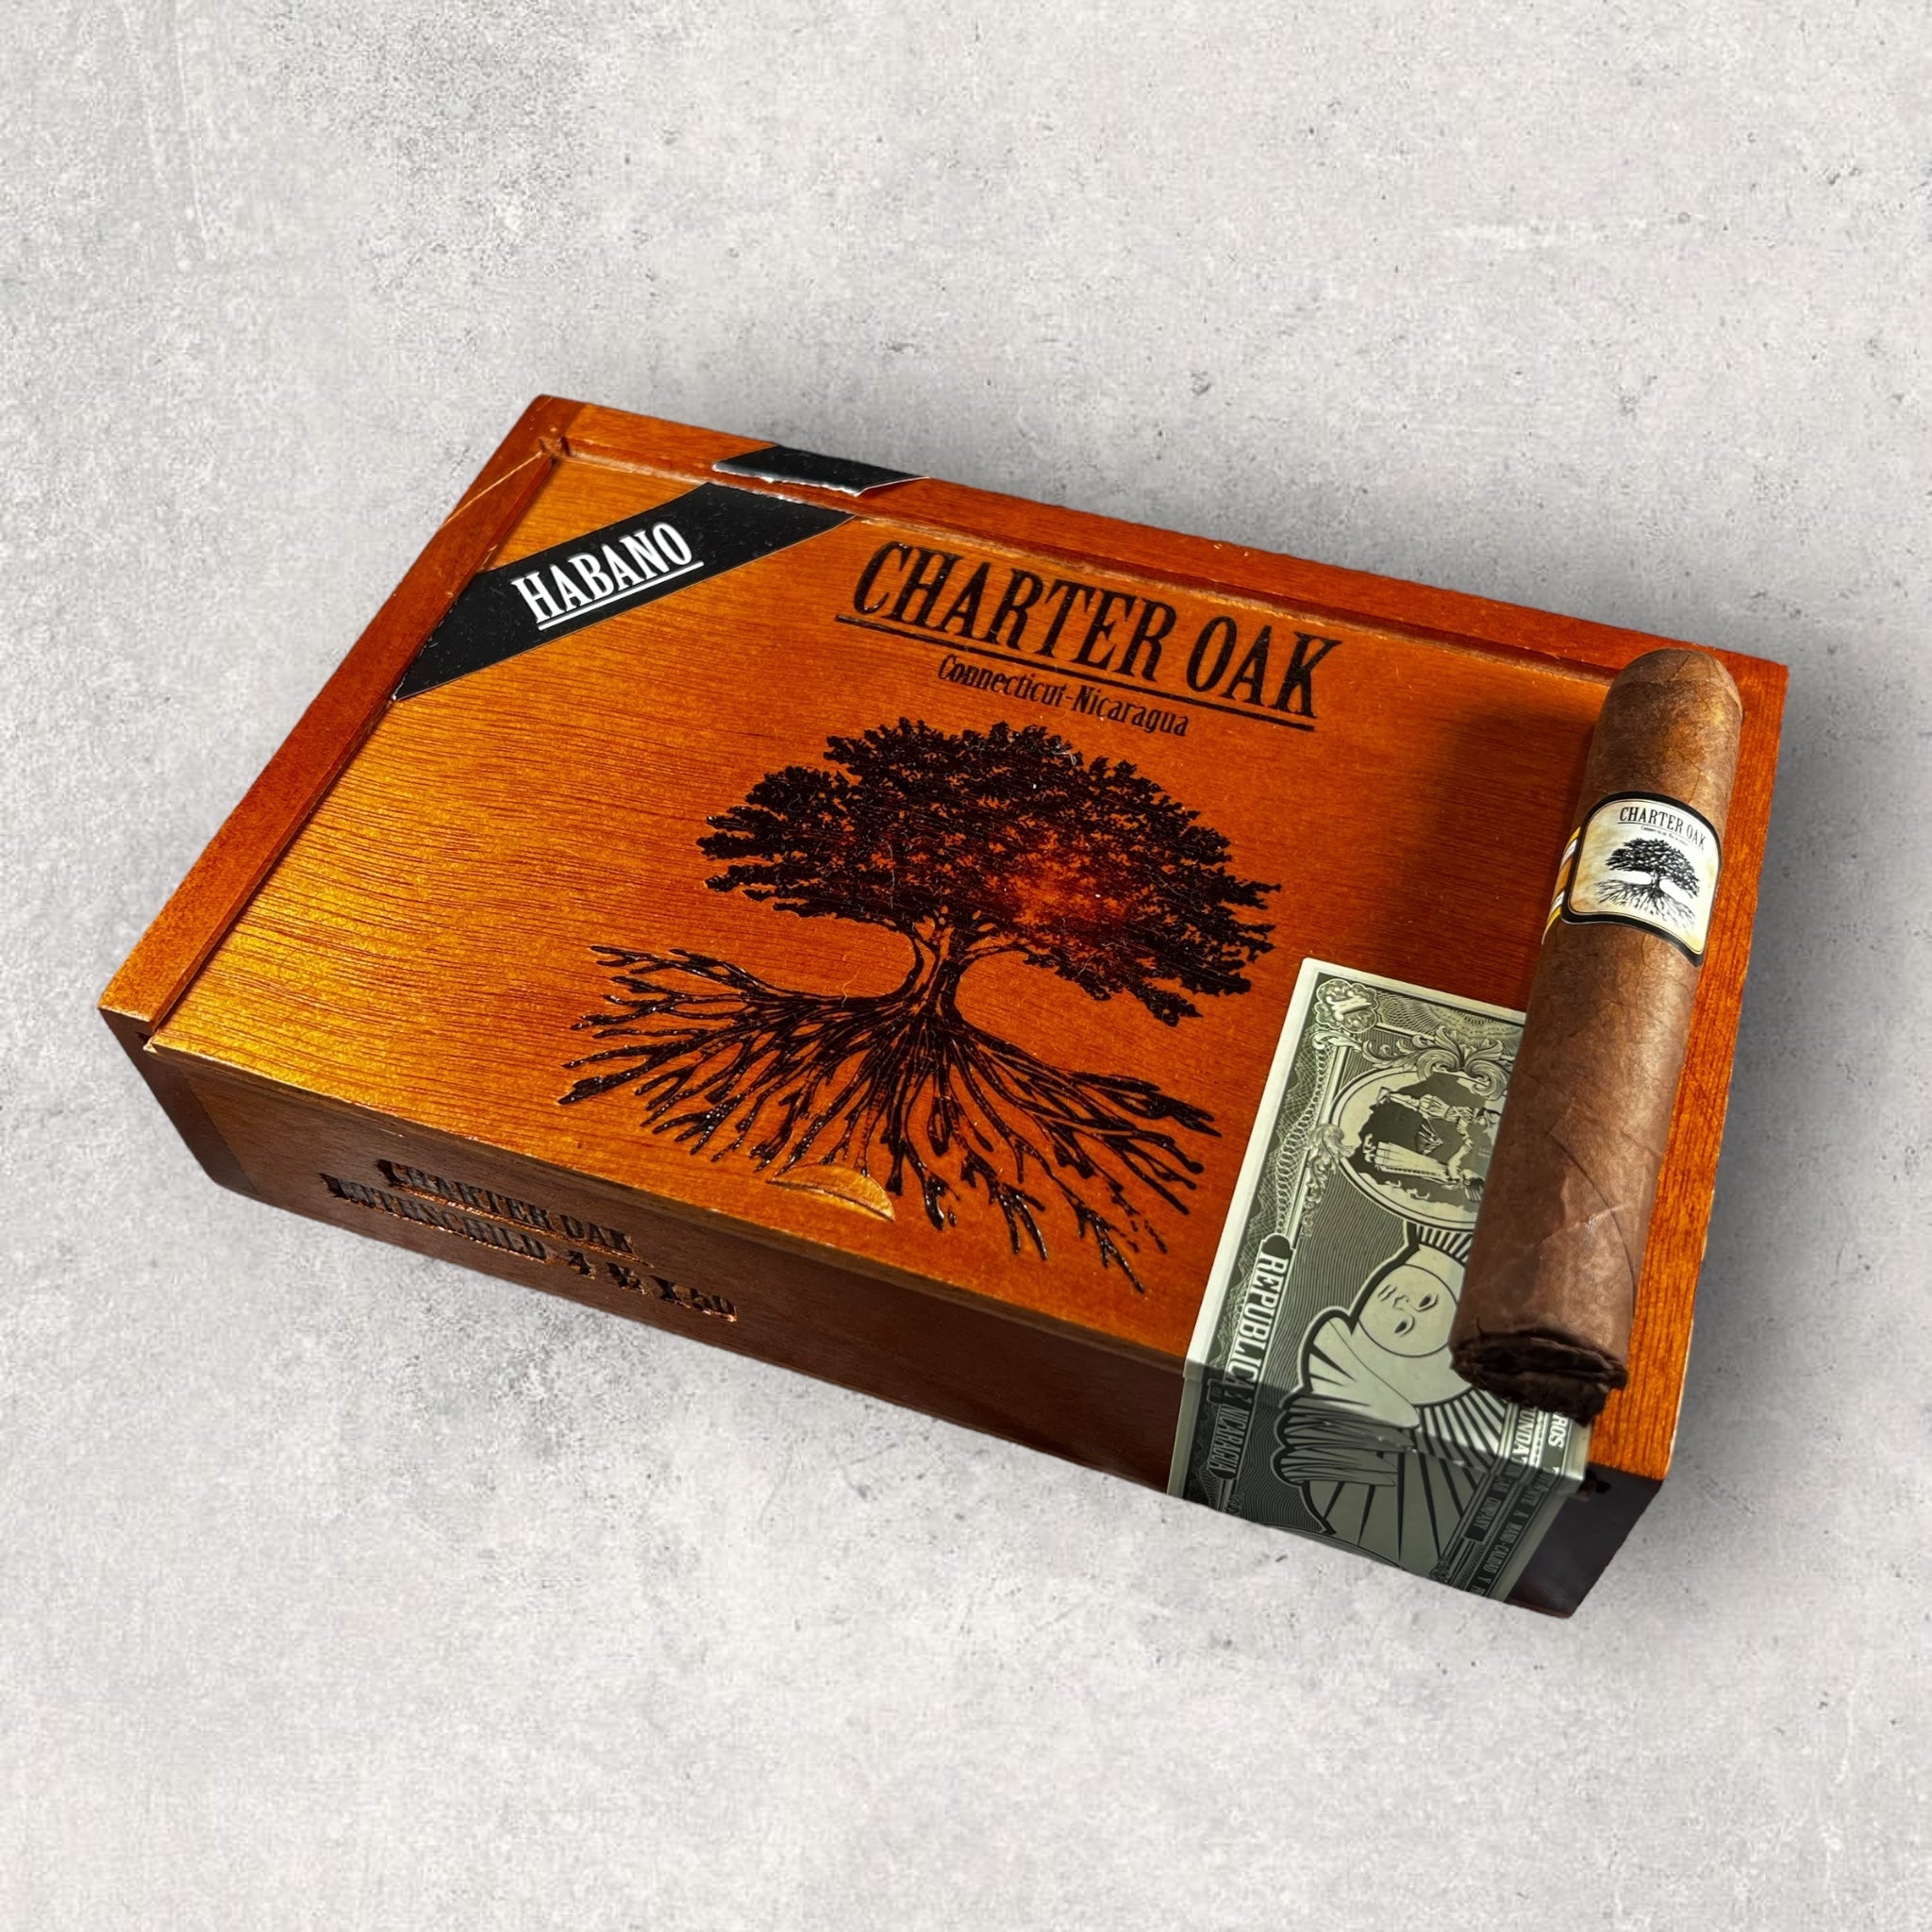 Foundation Charter Oak Habano Rothschild - Cigar 30